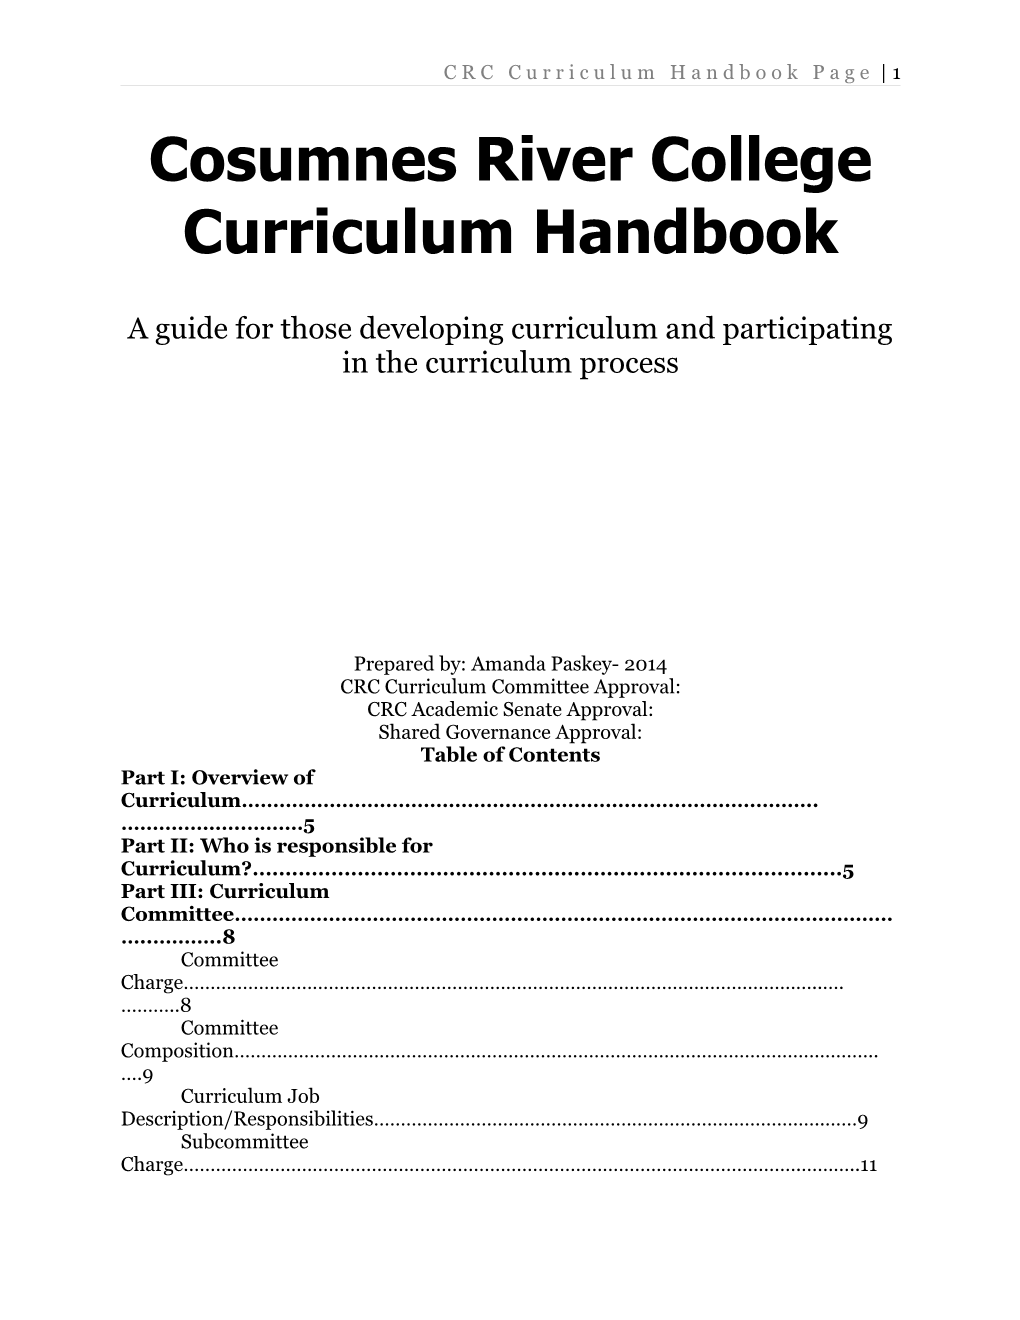 CRC Curriculum Handbook Page 1